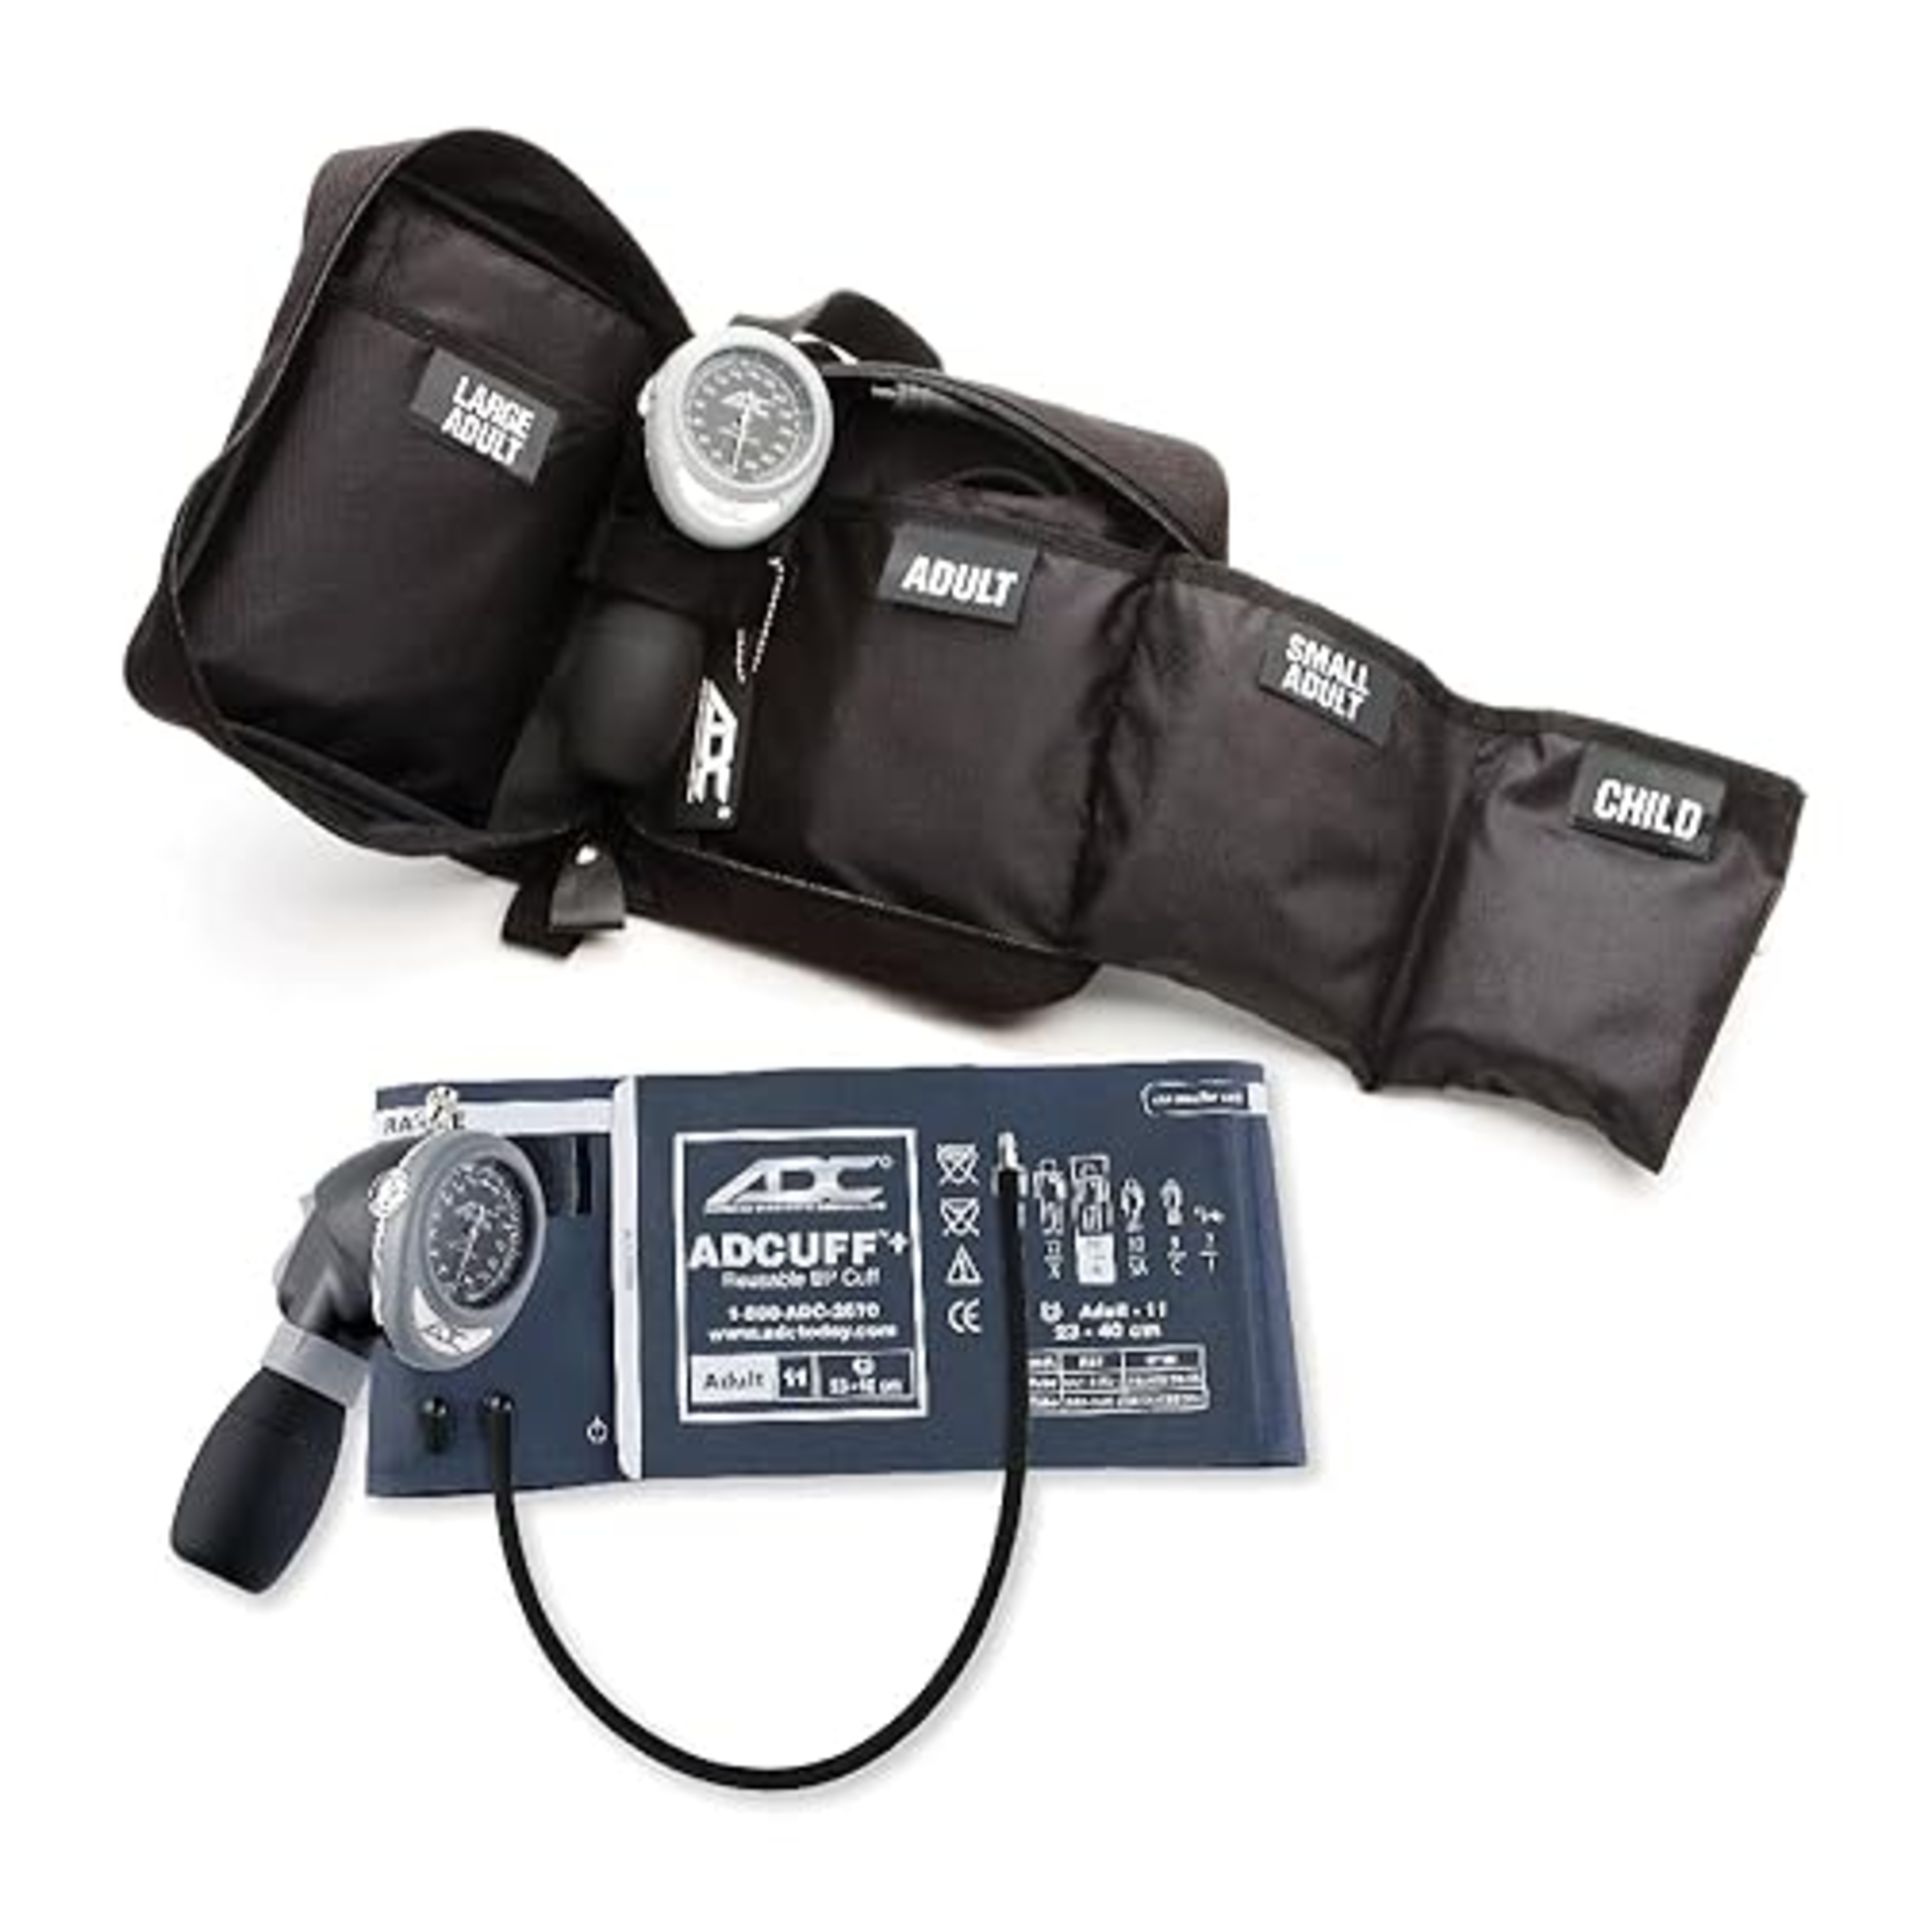 ADC Diagnotix Multikuf 732 4-Cuff EMT Kit, Professional Palm Aneroid Sphygmomanometer, Child, Small